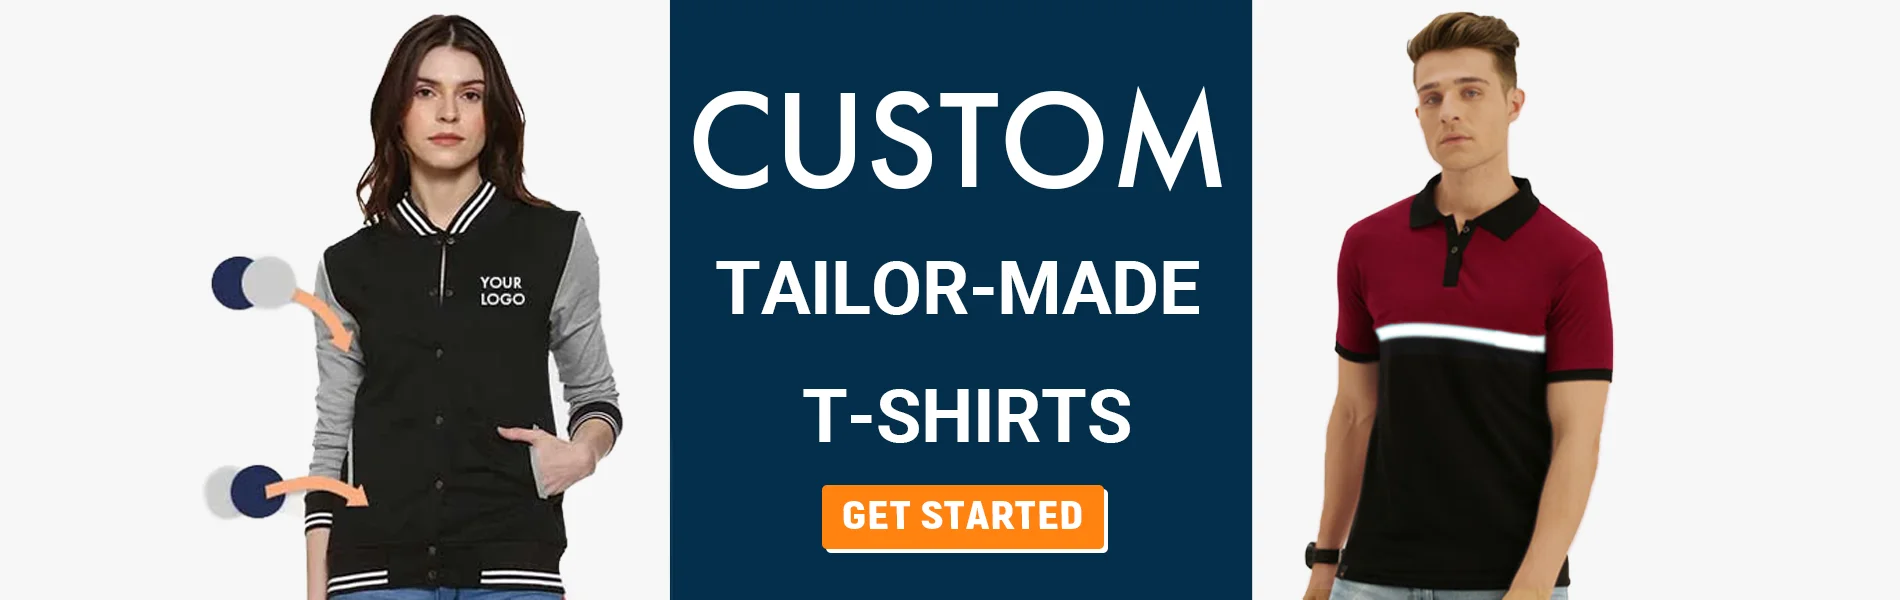 custom tailormade t-shirts goa